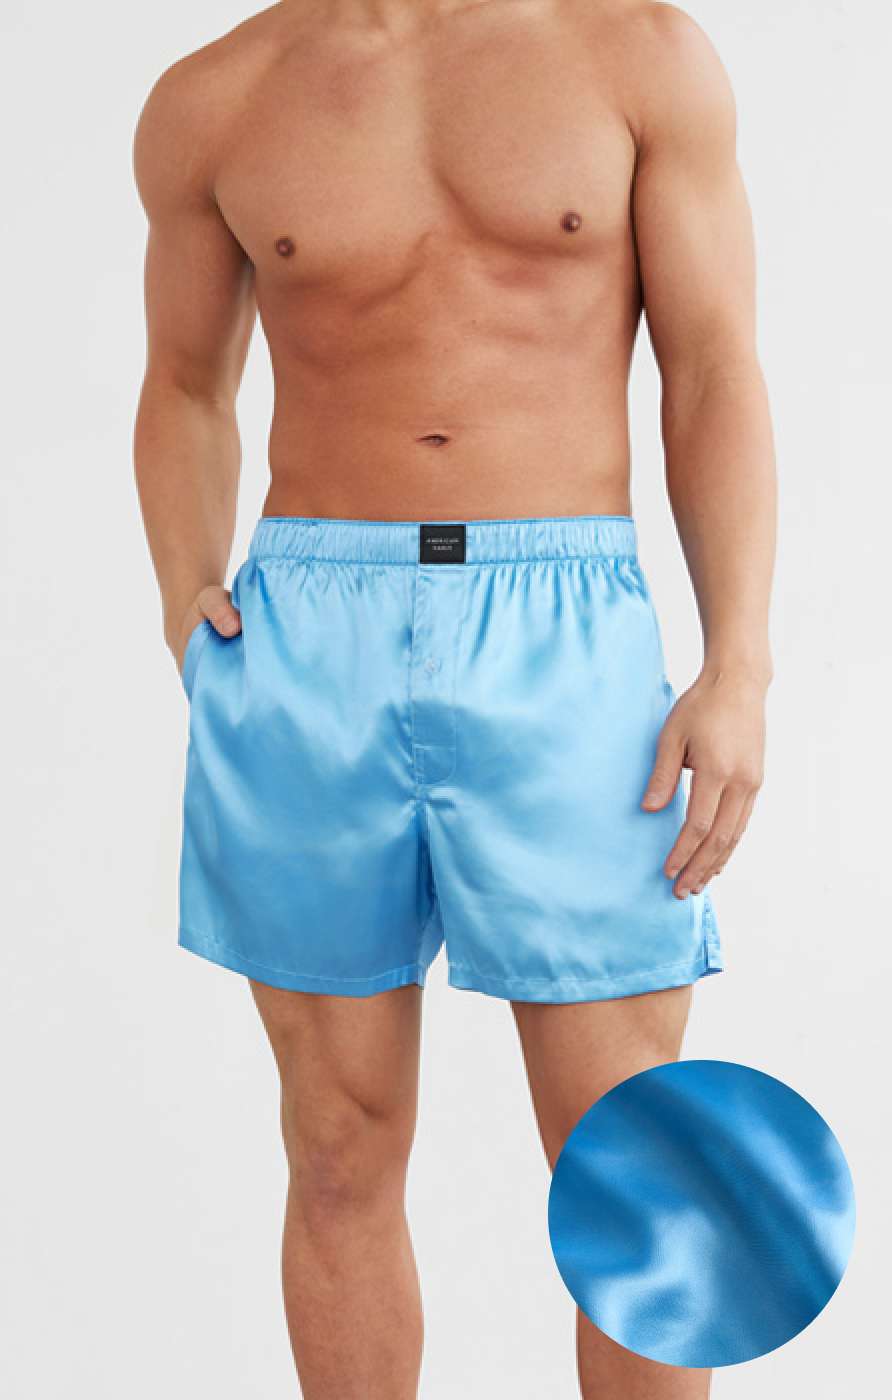 Jersey Boxers Underwear for Men - JCPenney